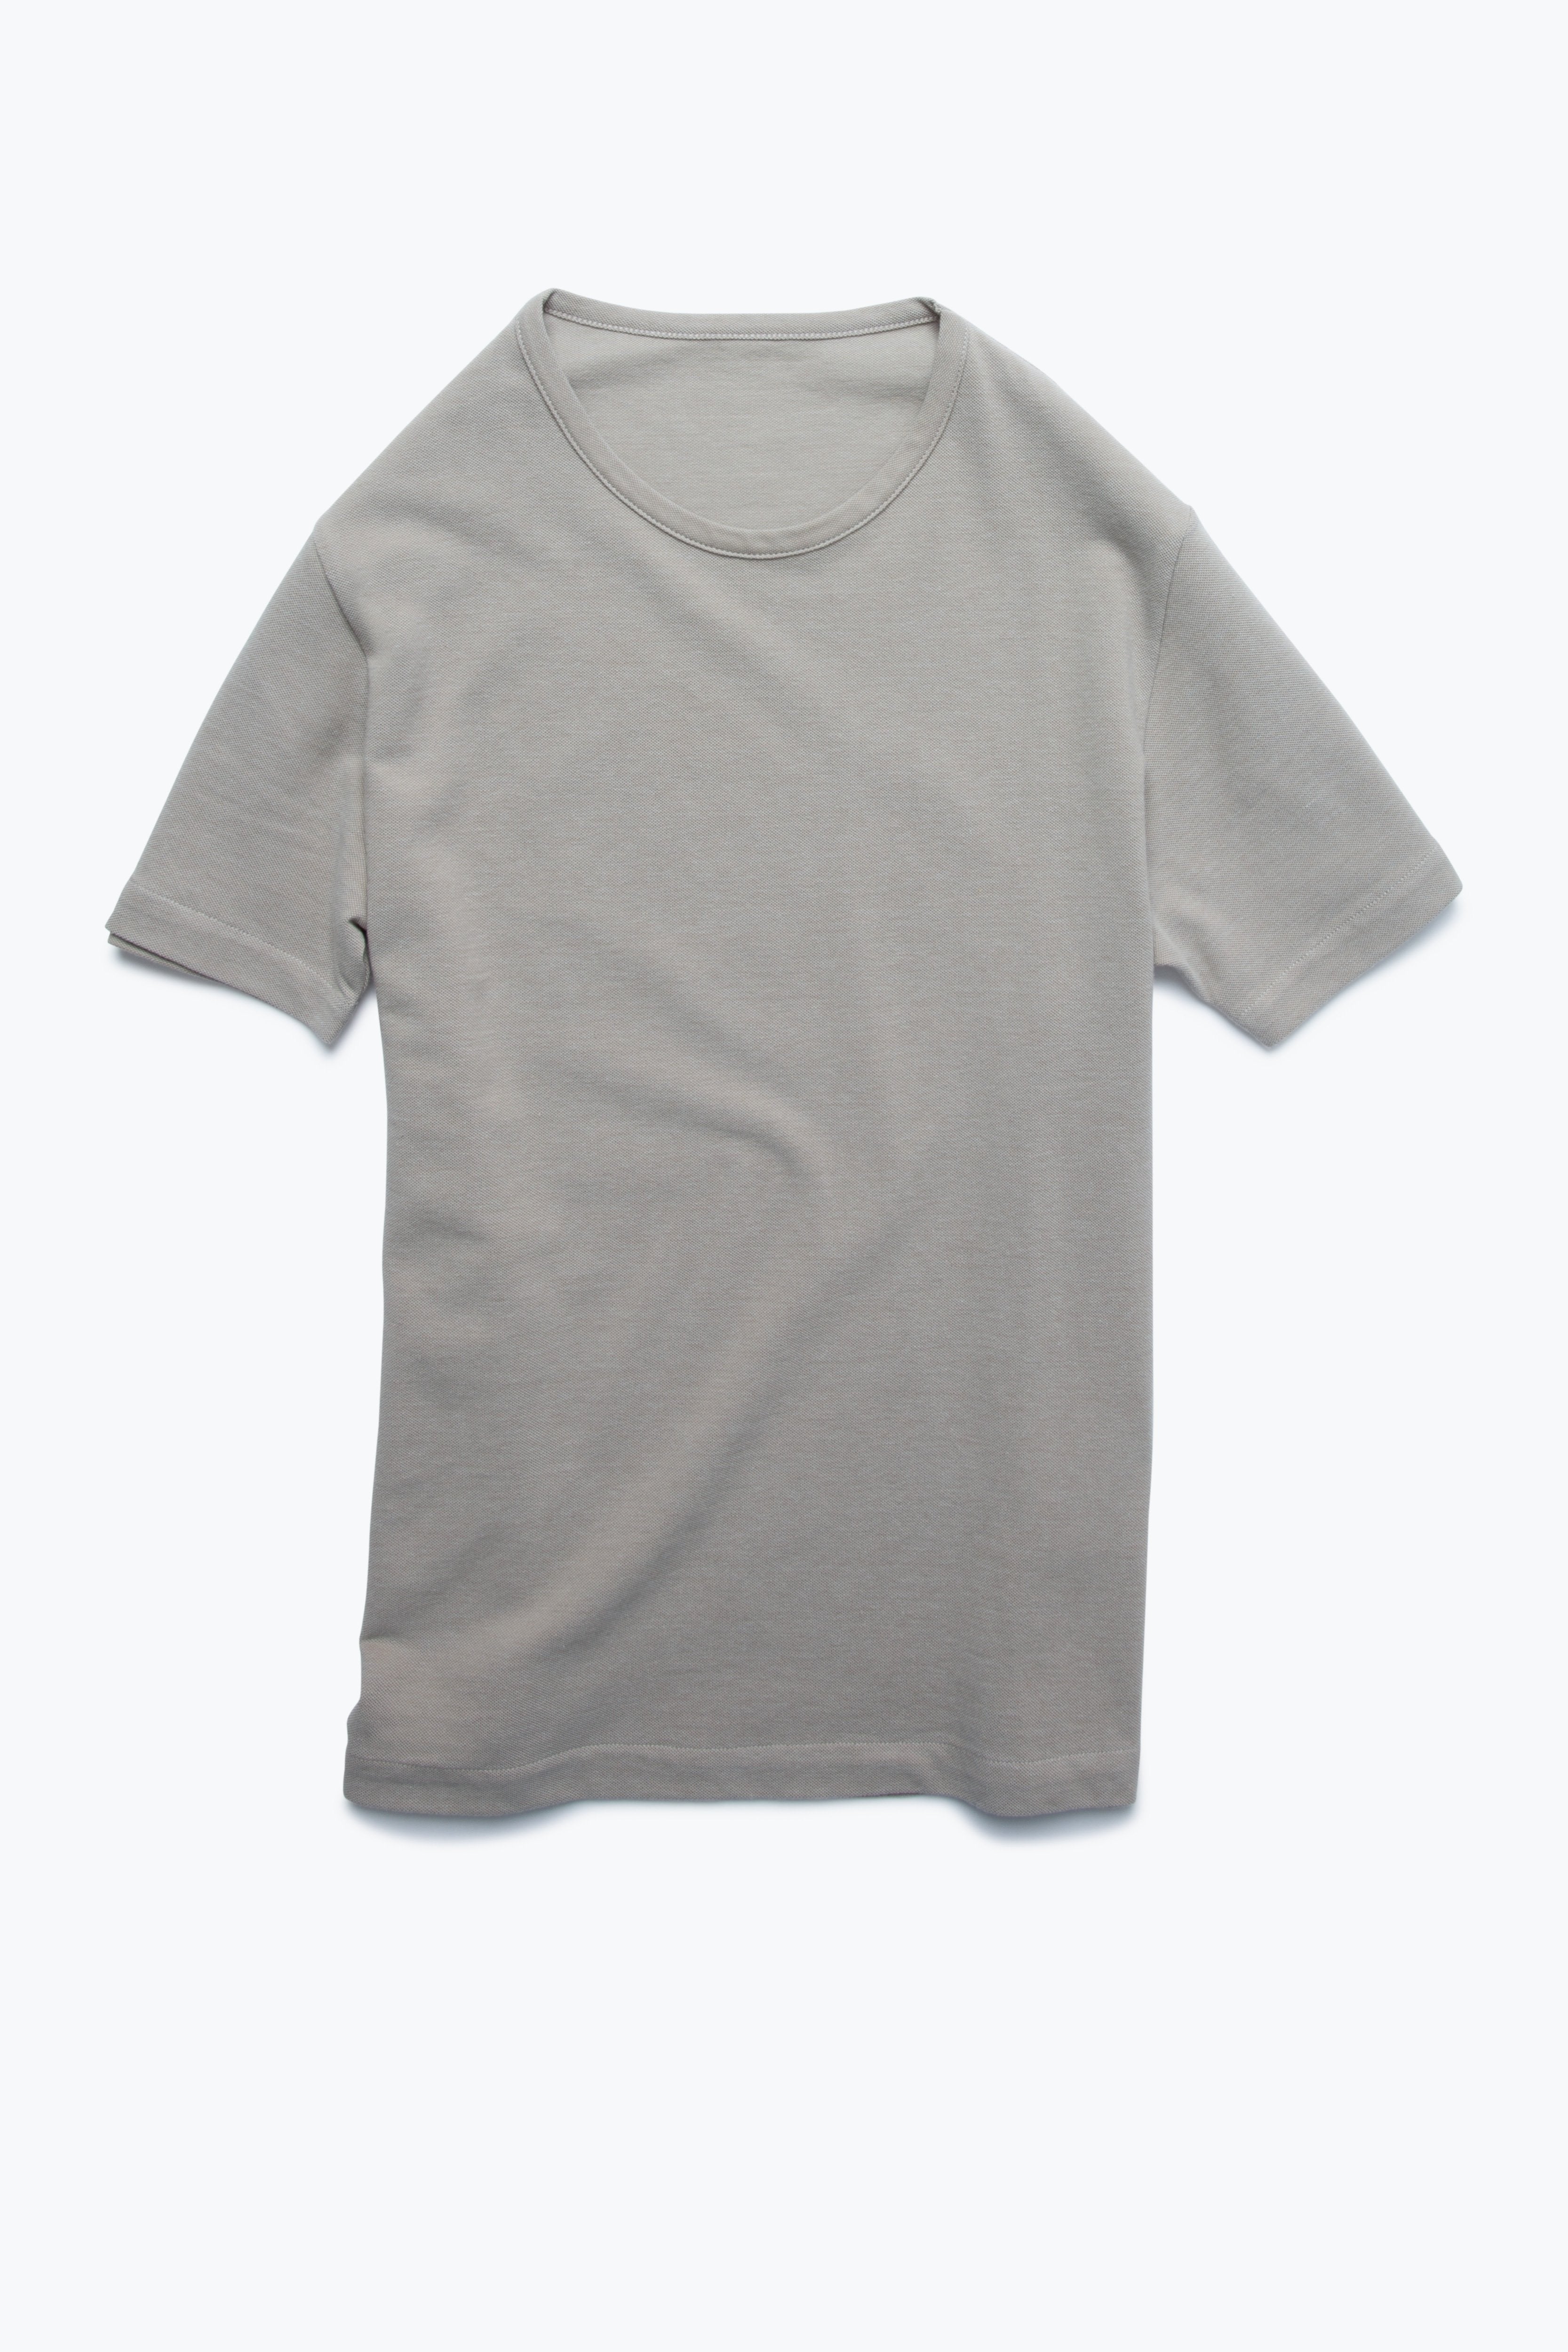 MTO - T-Shirt (Taupe Cotton Pique)